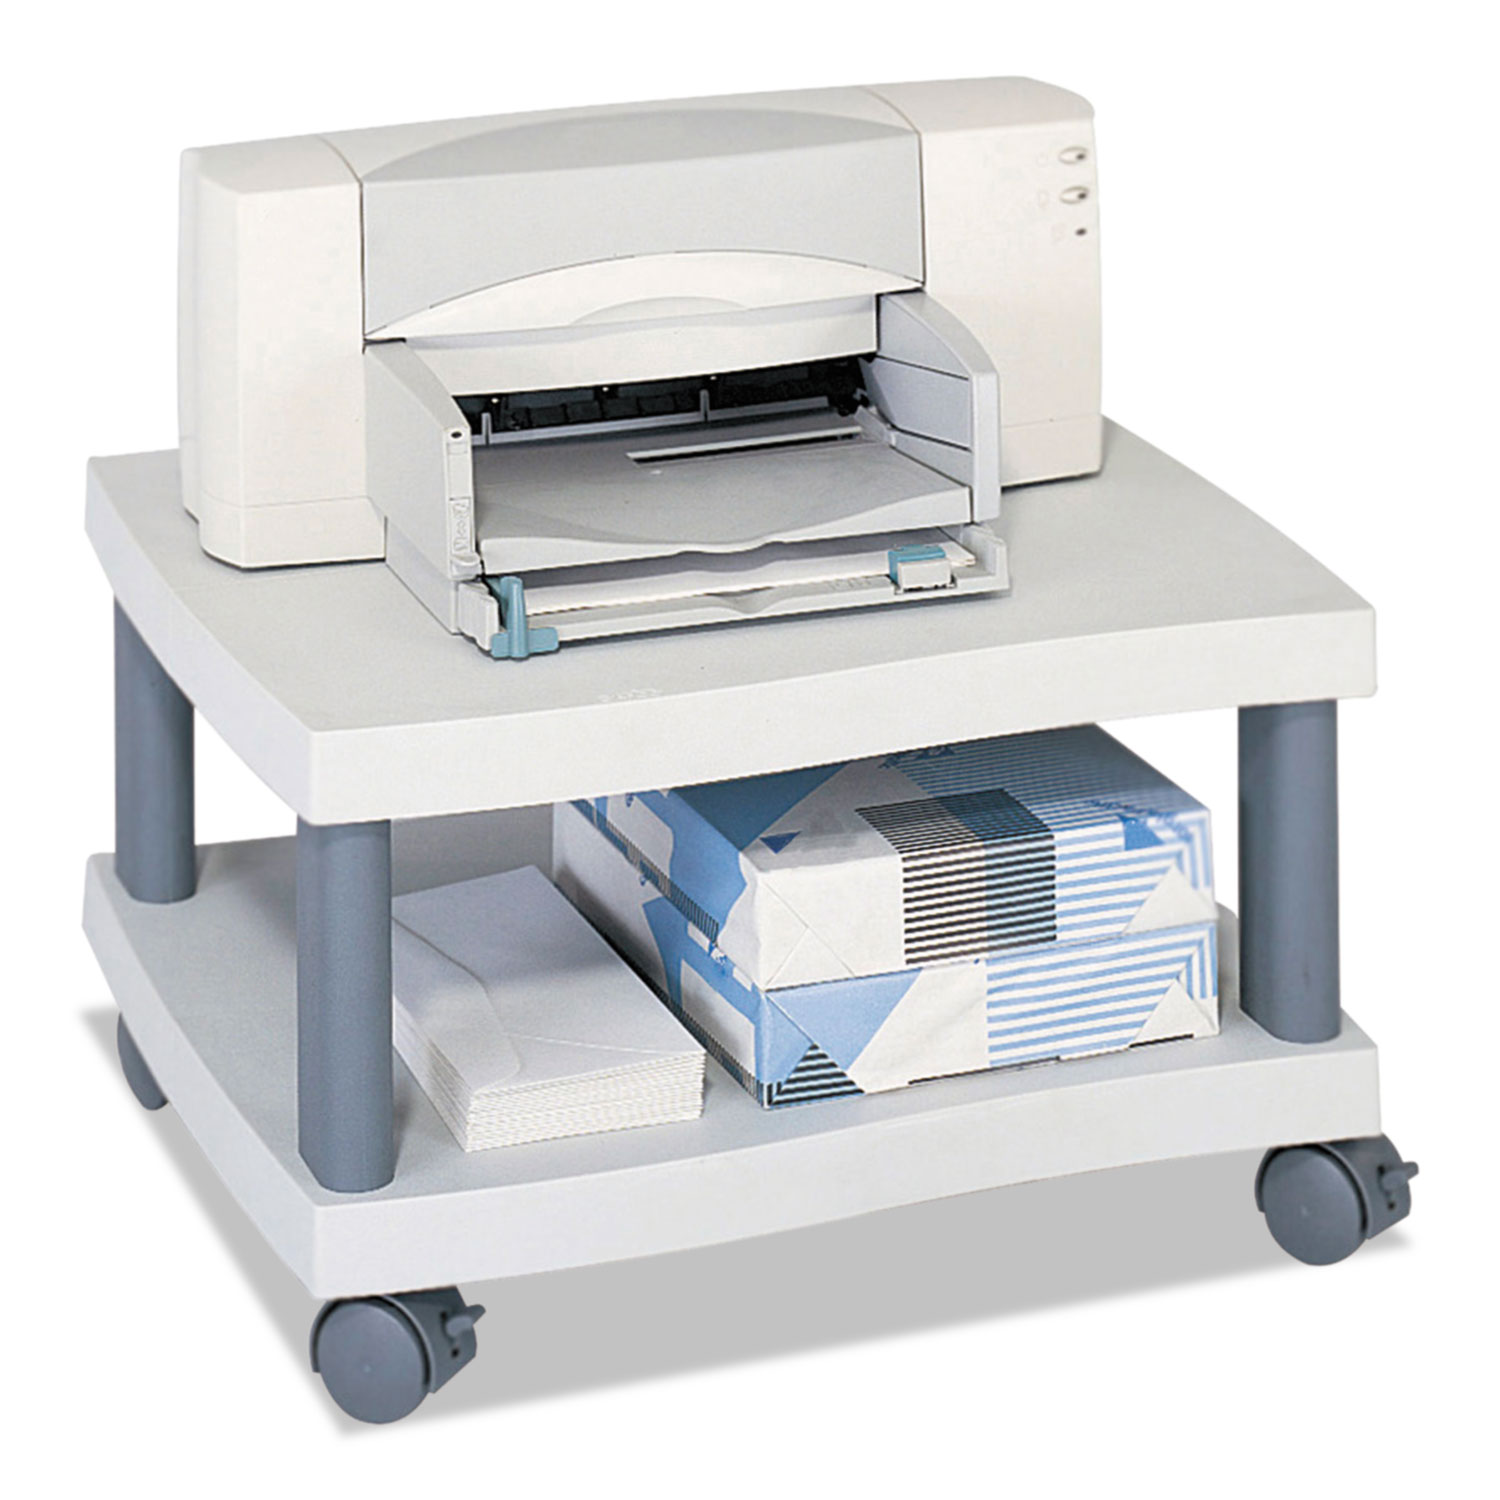  Safco 1861GR Wave Design Printer Stand, Two-Shelf, 20w x 17.5d x 11.5h, Charcoal Gray (SAF1861GR) 